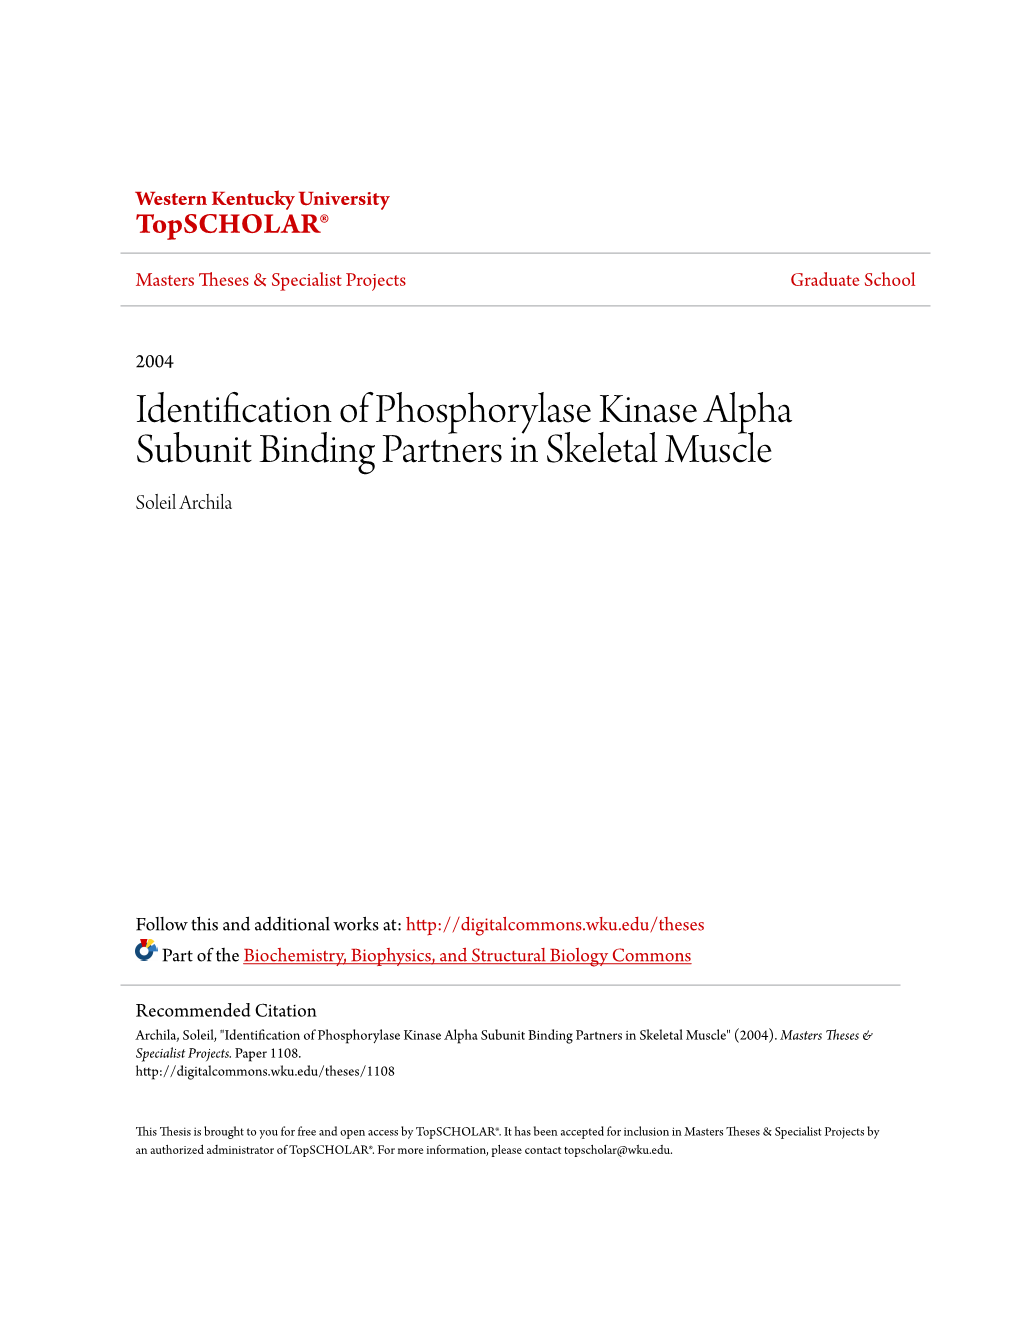 Identification of Phosphorylase Kinase Alpha Subunit Binding Partners in Skeletal Muscle Soleil Archila